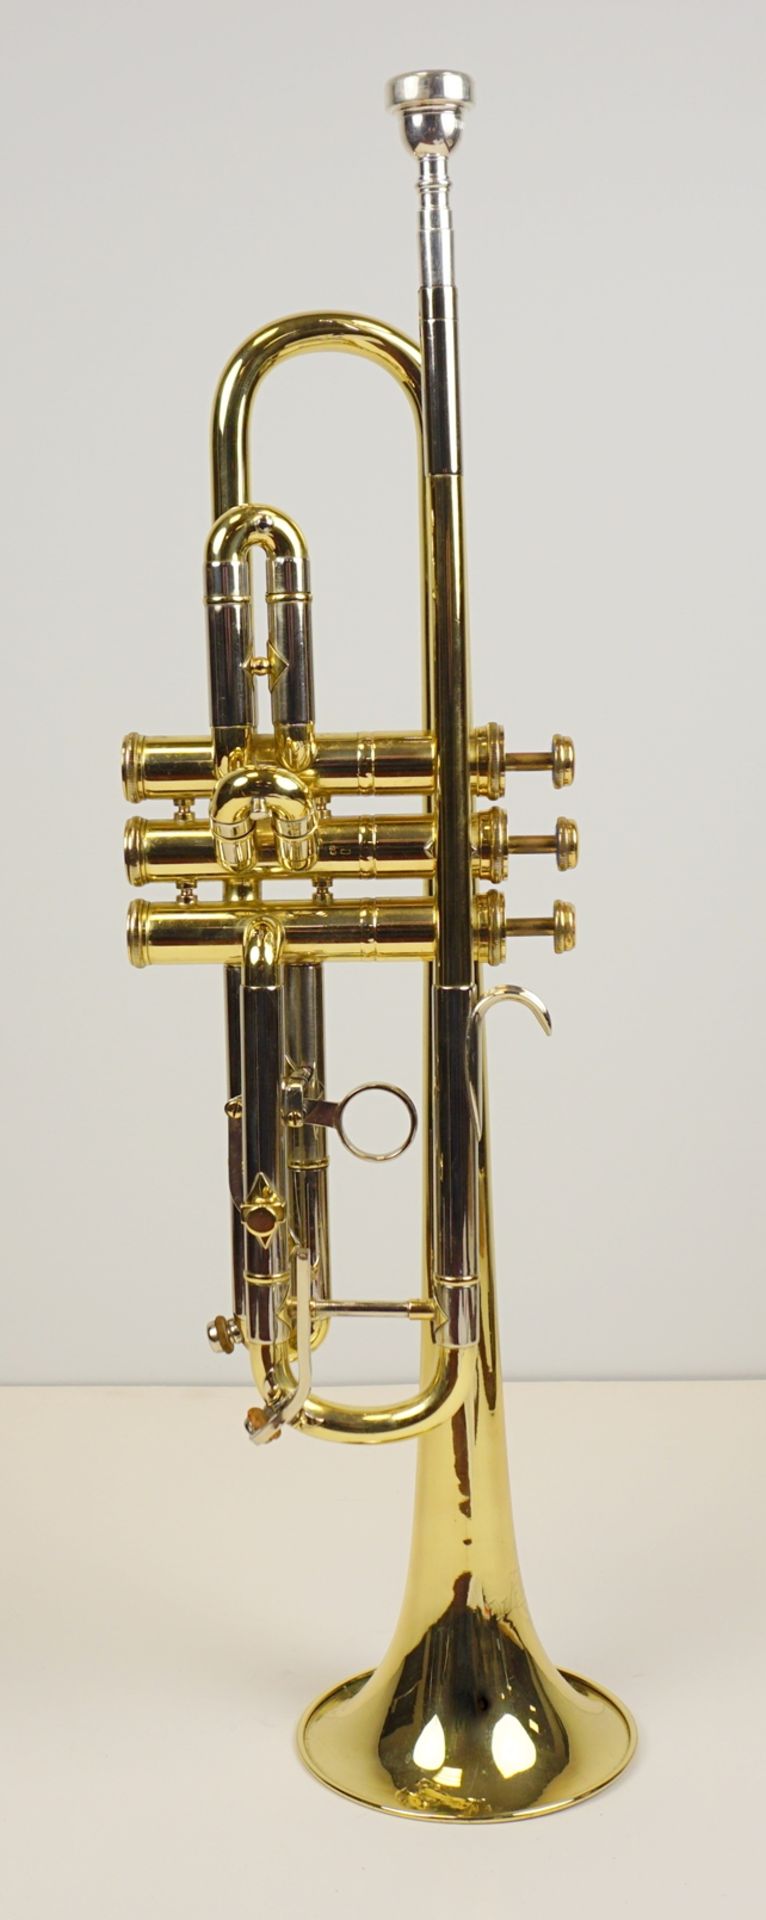 Trompete, Weltklang, Messing, Länge ca. 55cm